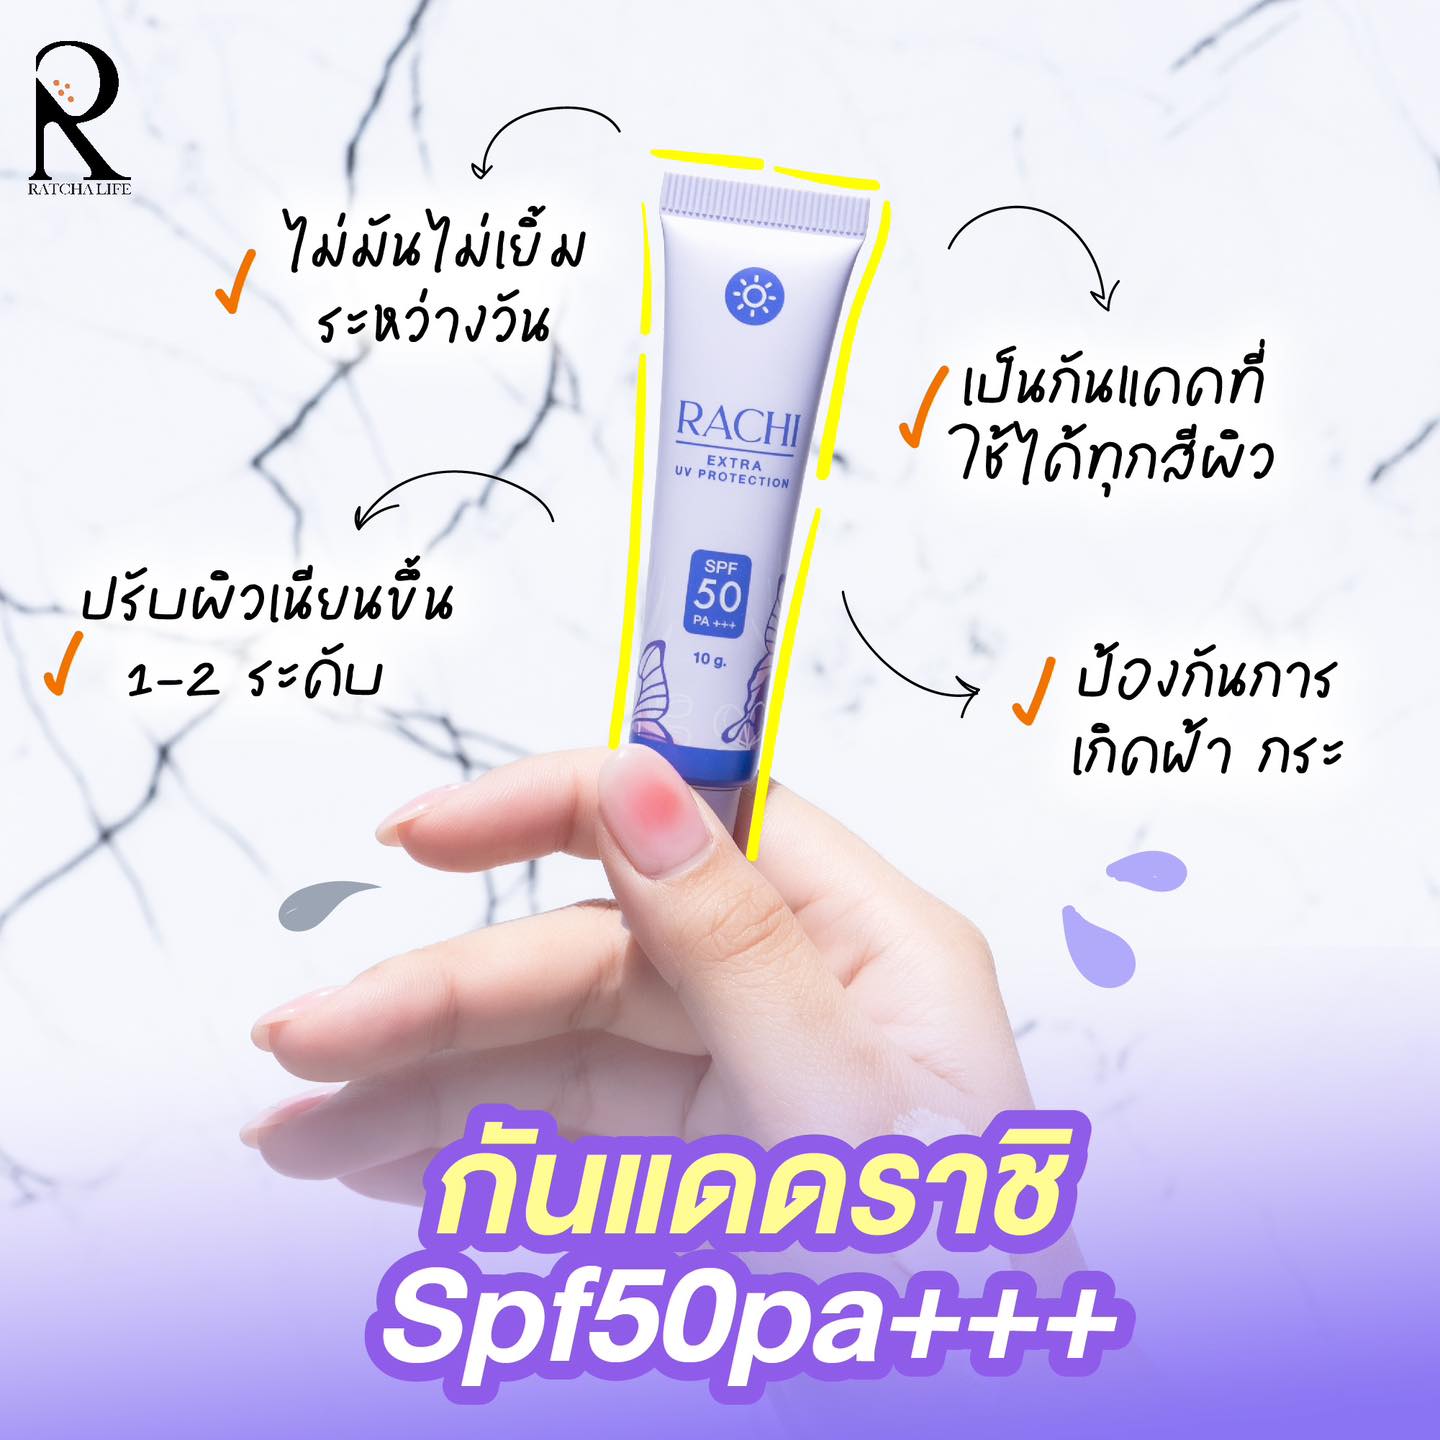 Rachi Extra UV Protection SPF50+++